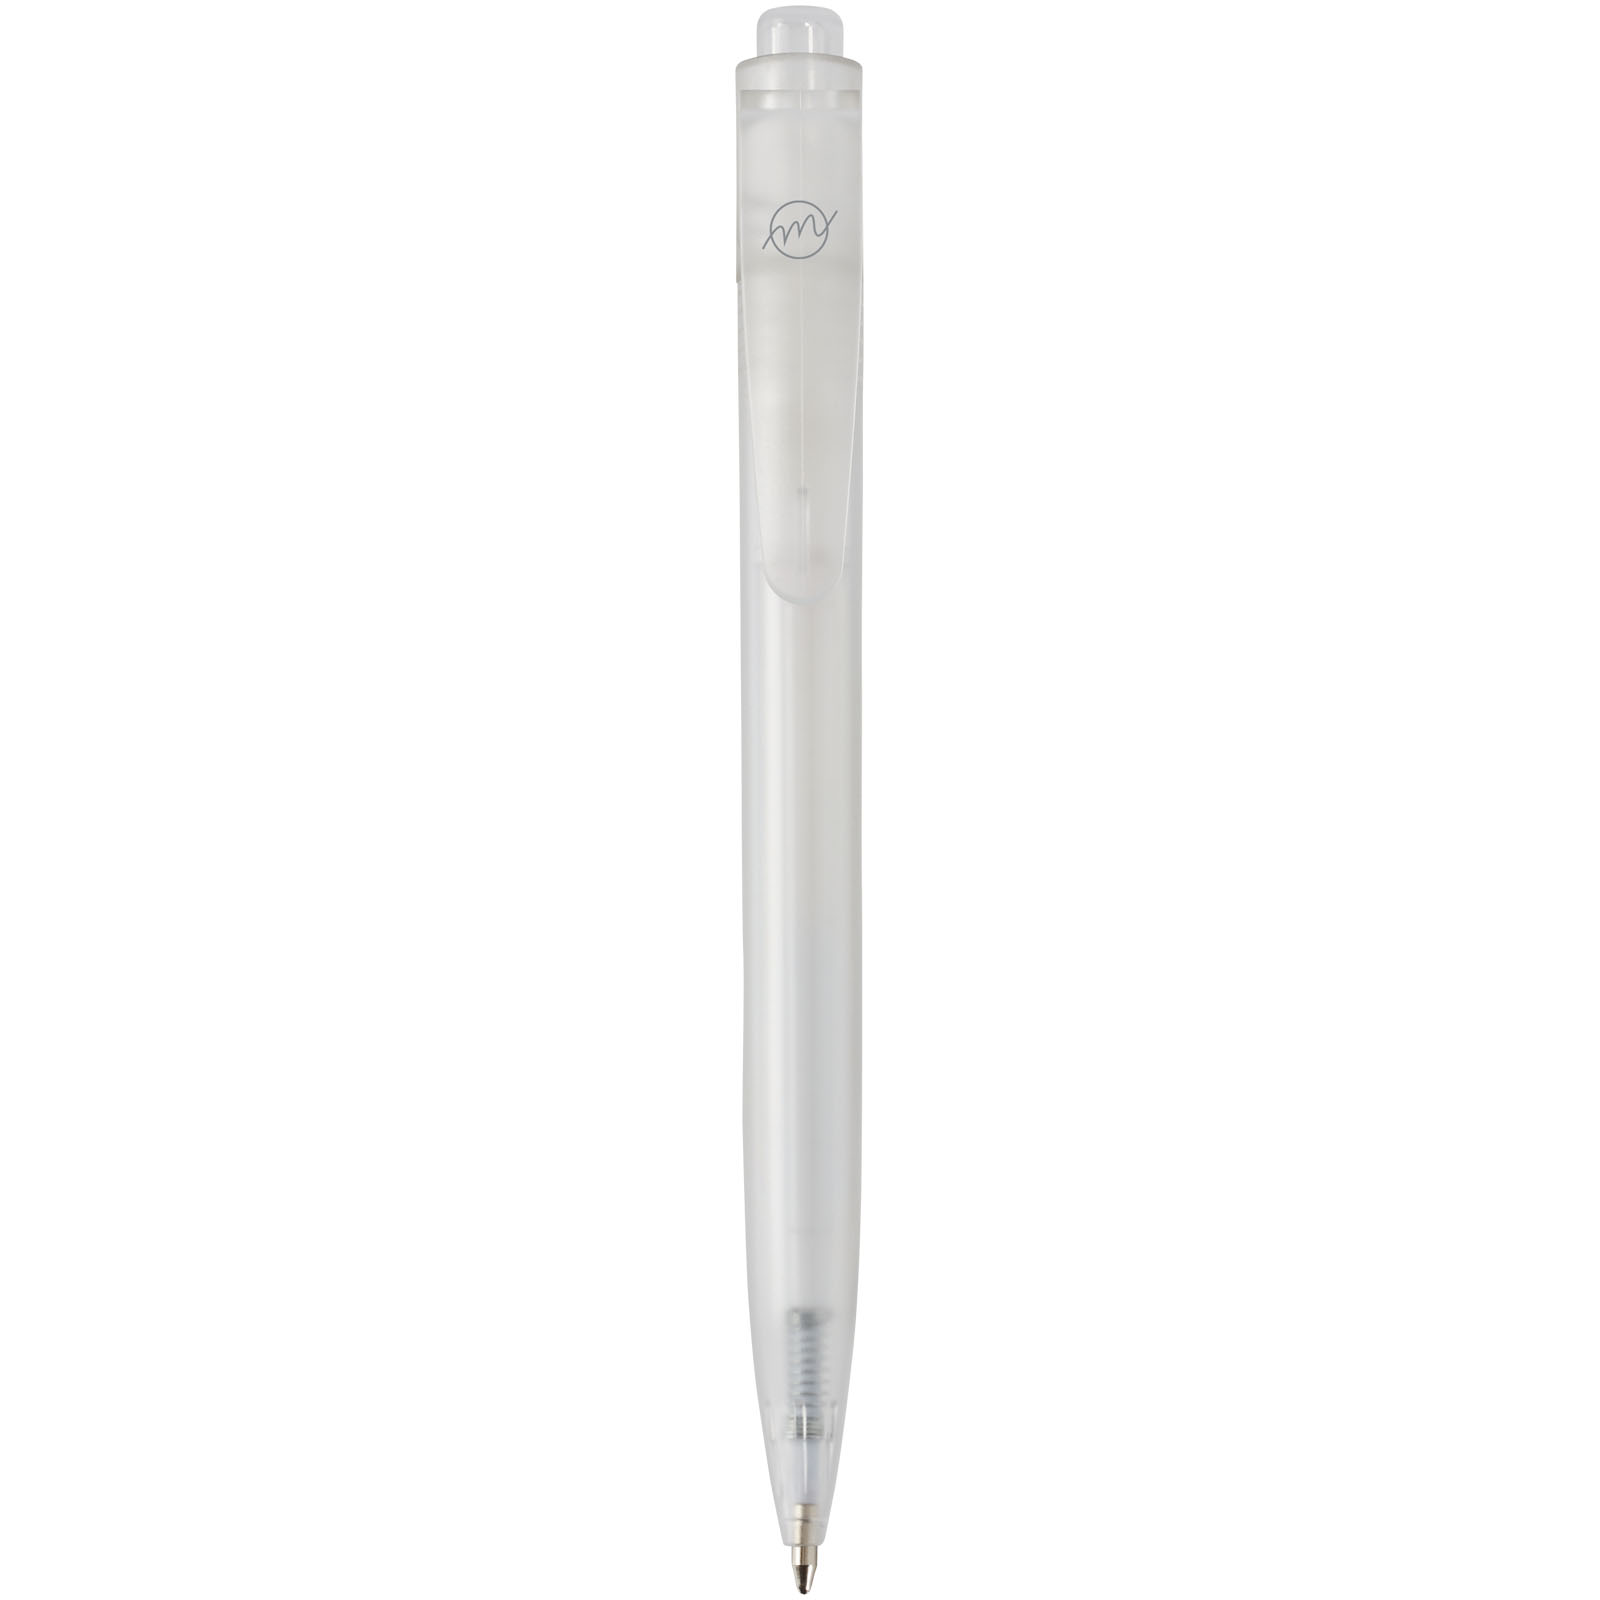 Advertising Ballpoint Pens - Thalaasa ocean-bound plastic ballpoint pen - 0